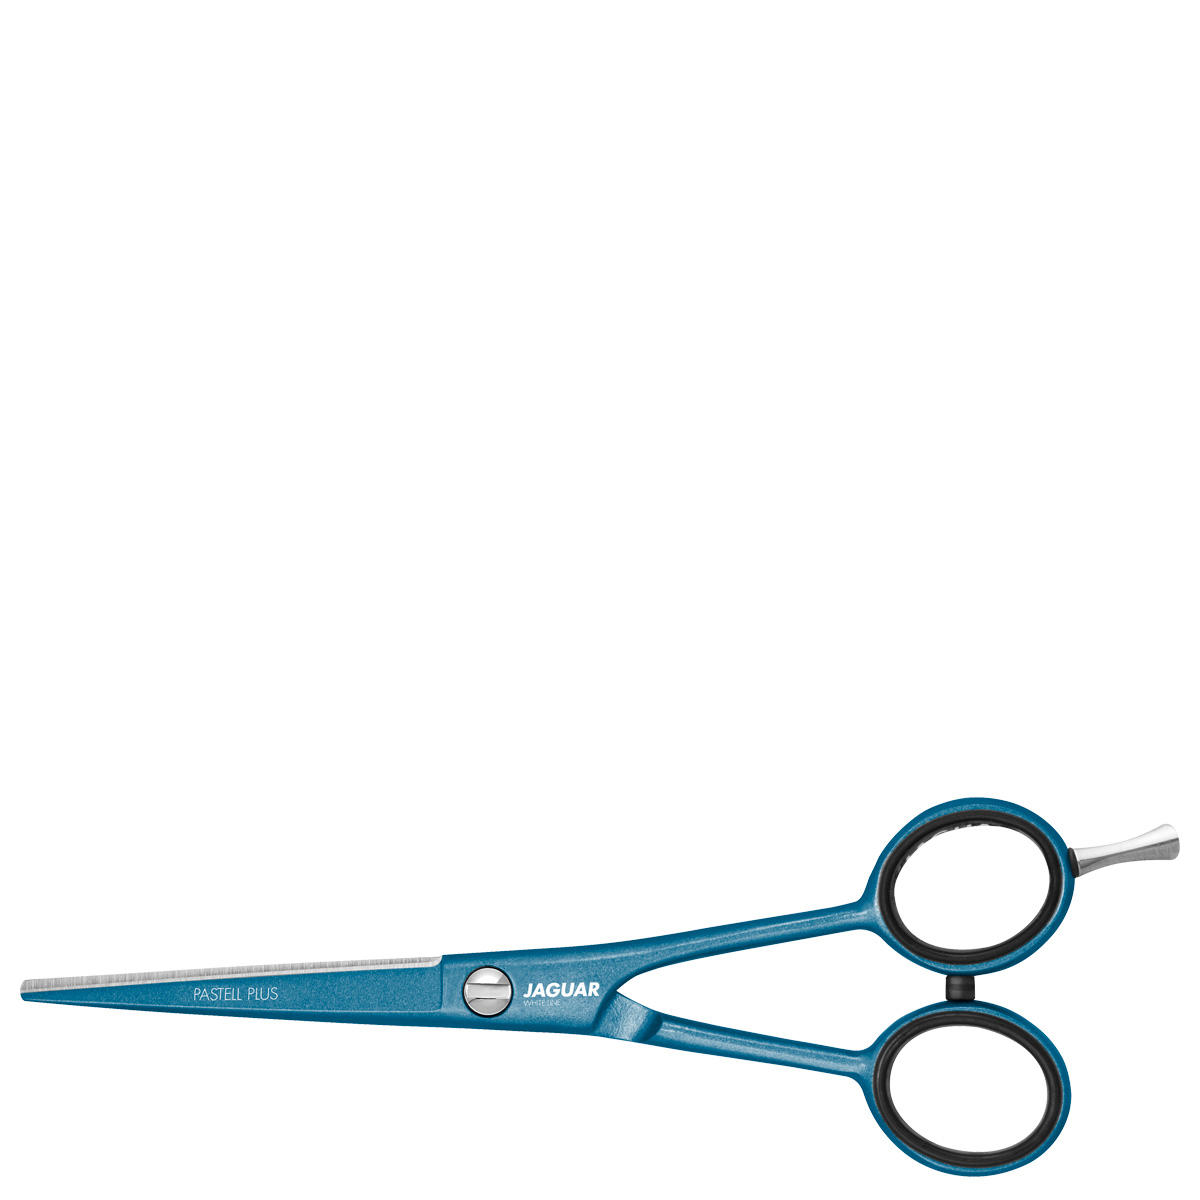 Jaguar Hair scissors Pastel Plus 5½", Atlantic